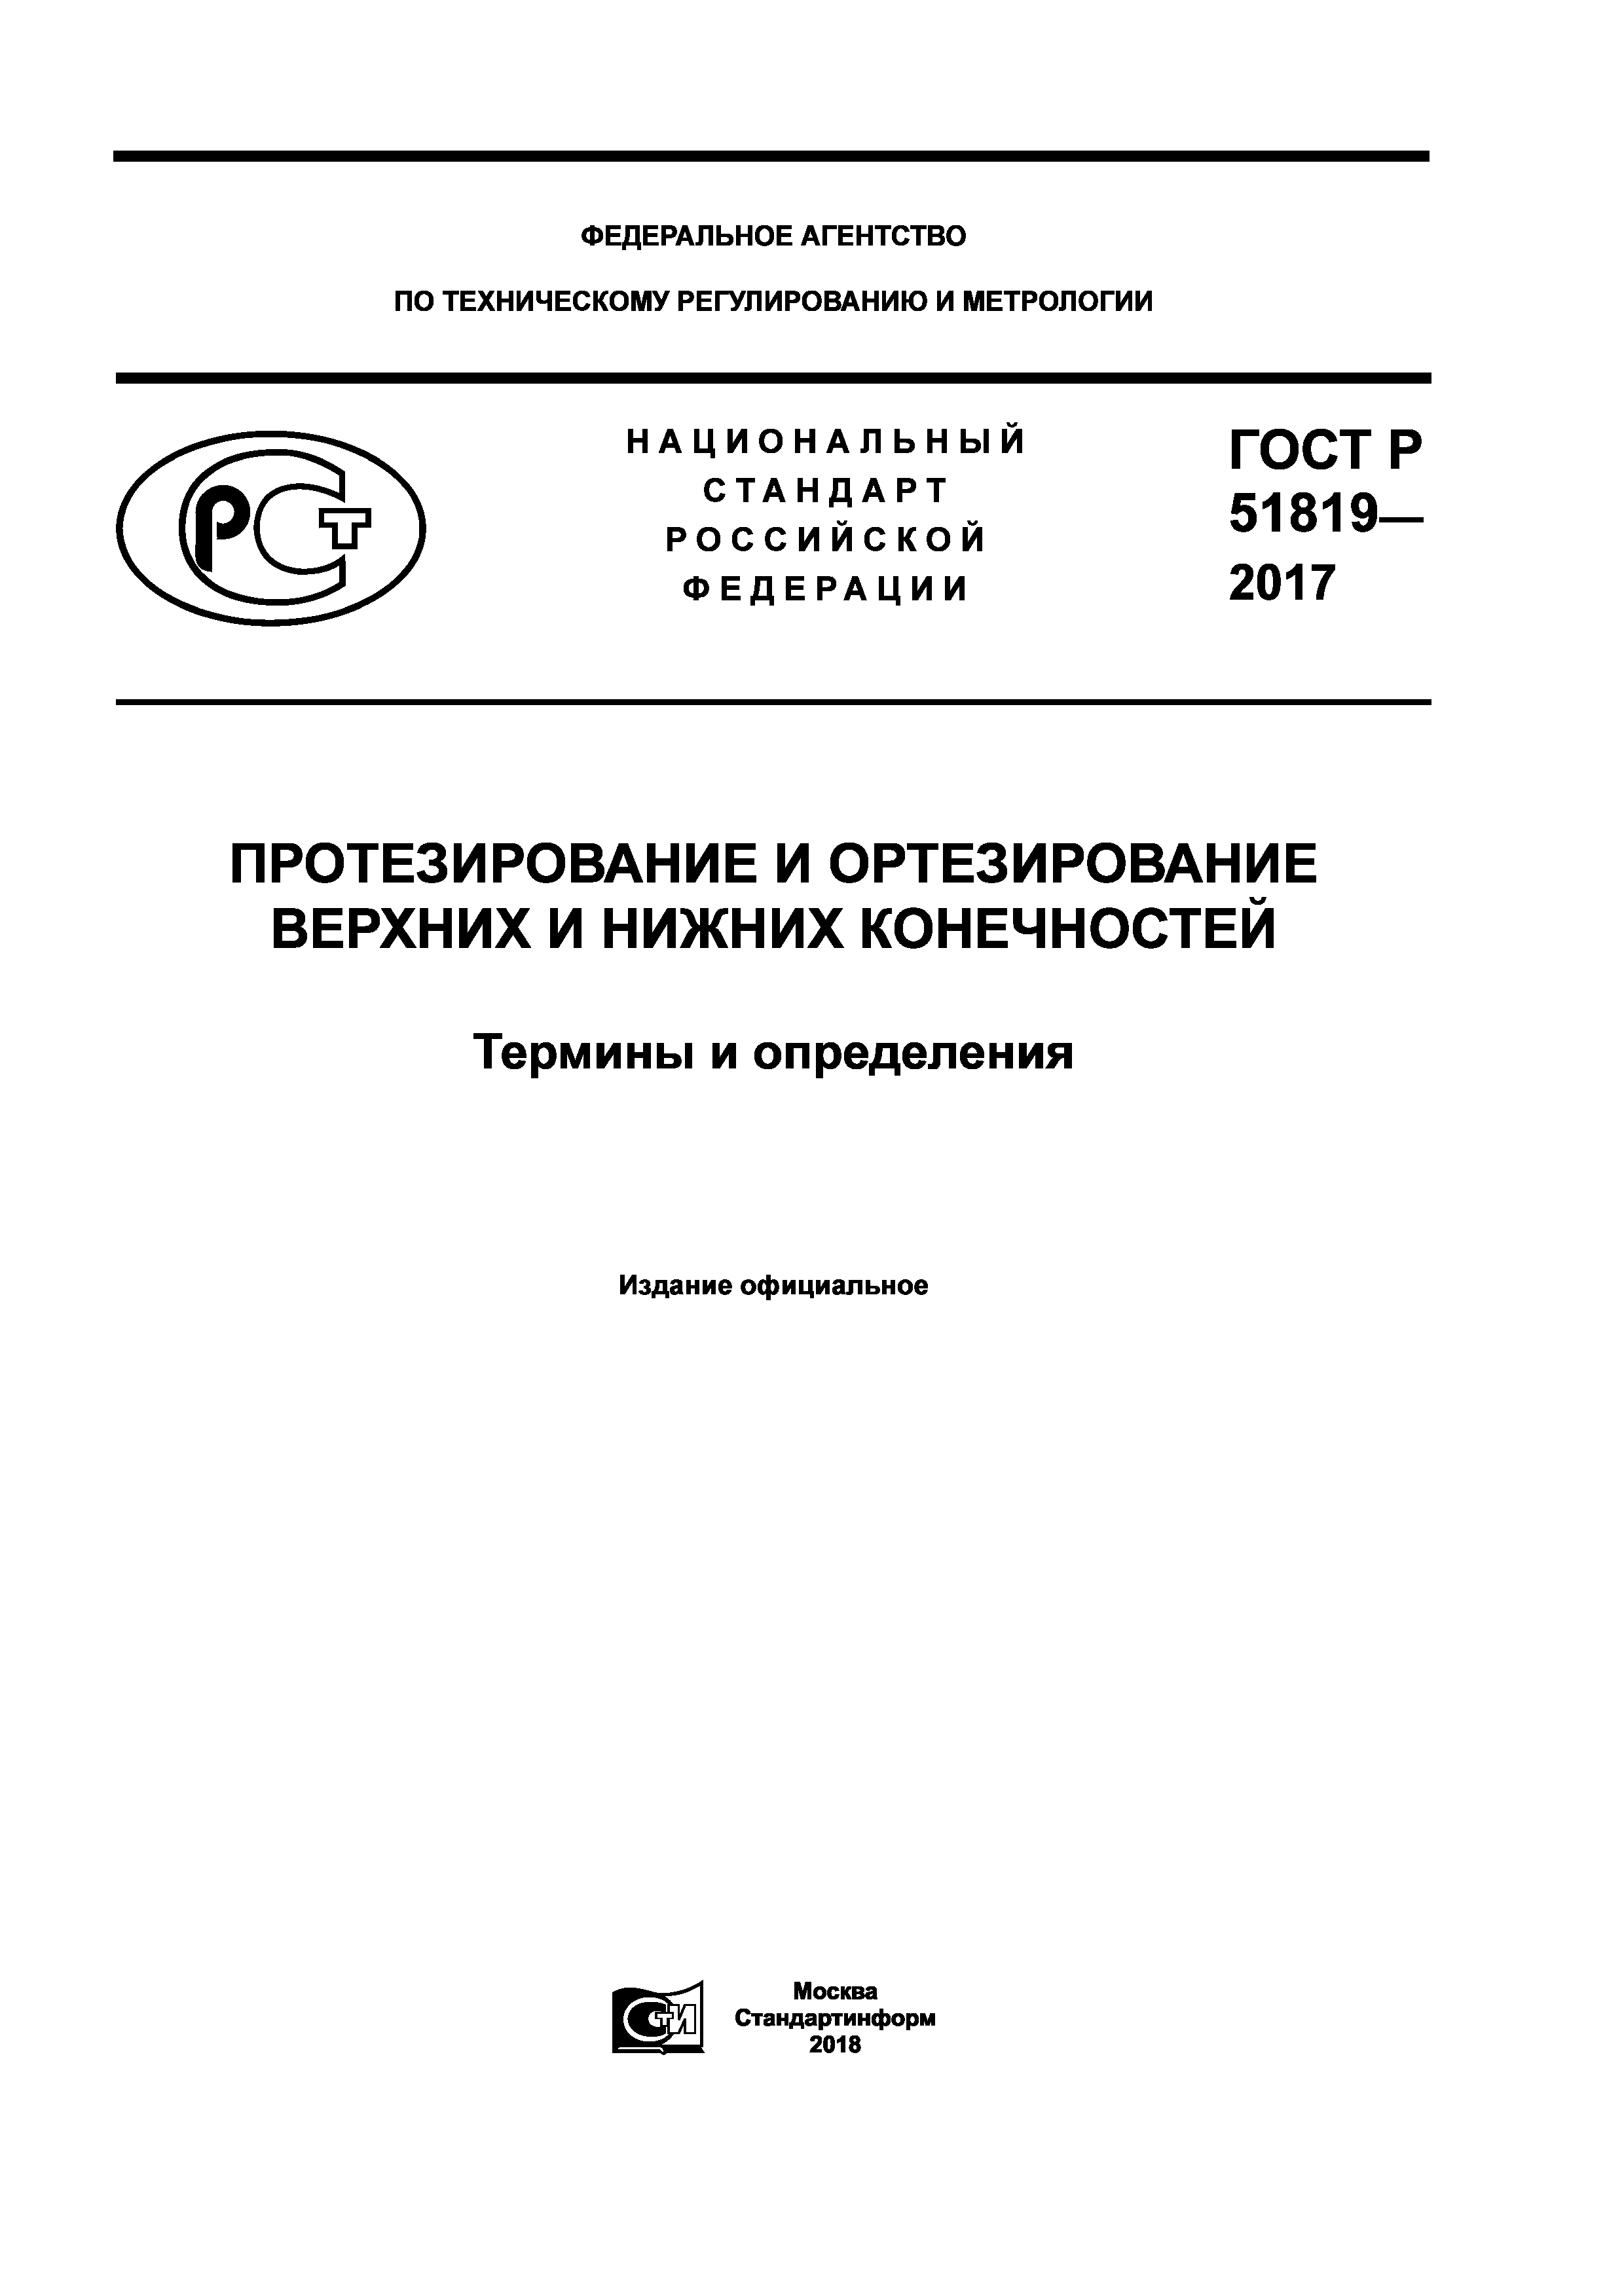 ГОСТ Р 51819-2017